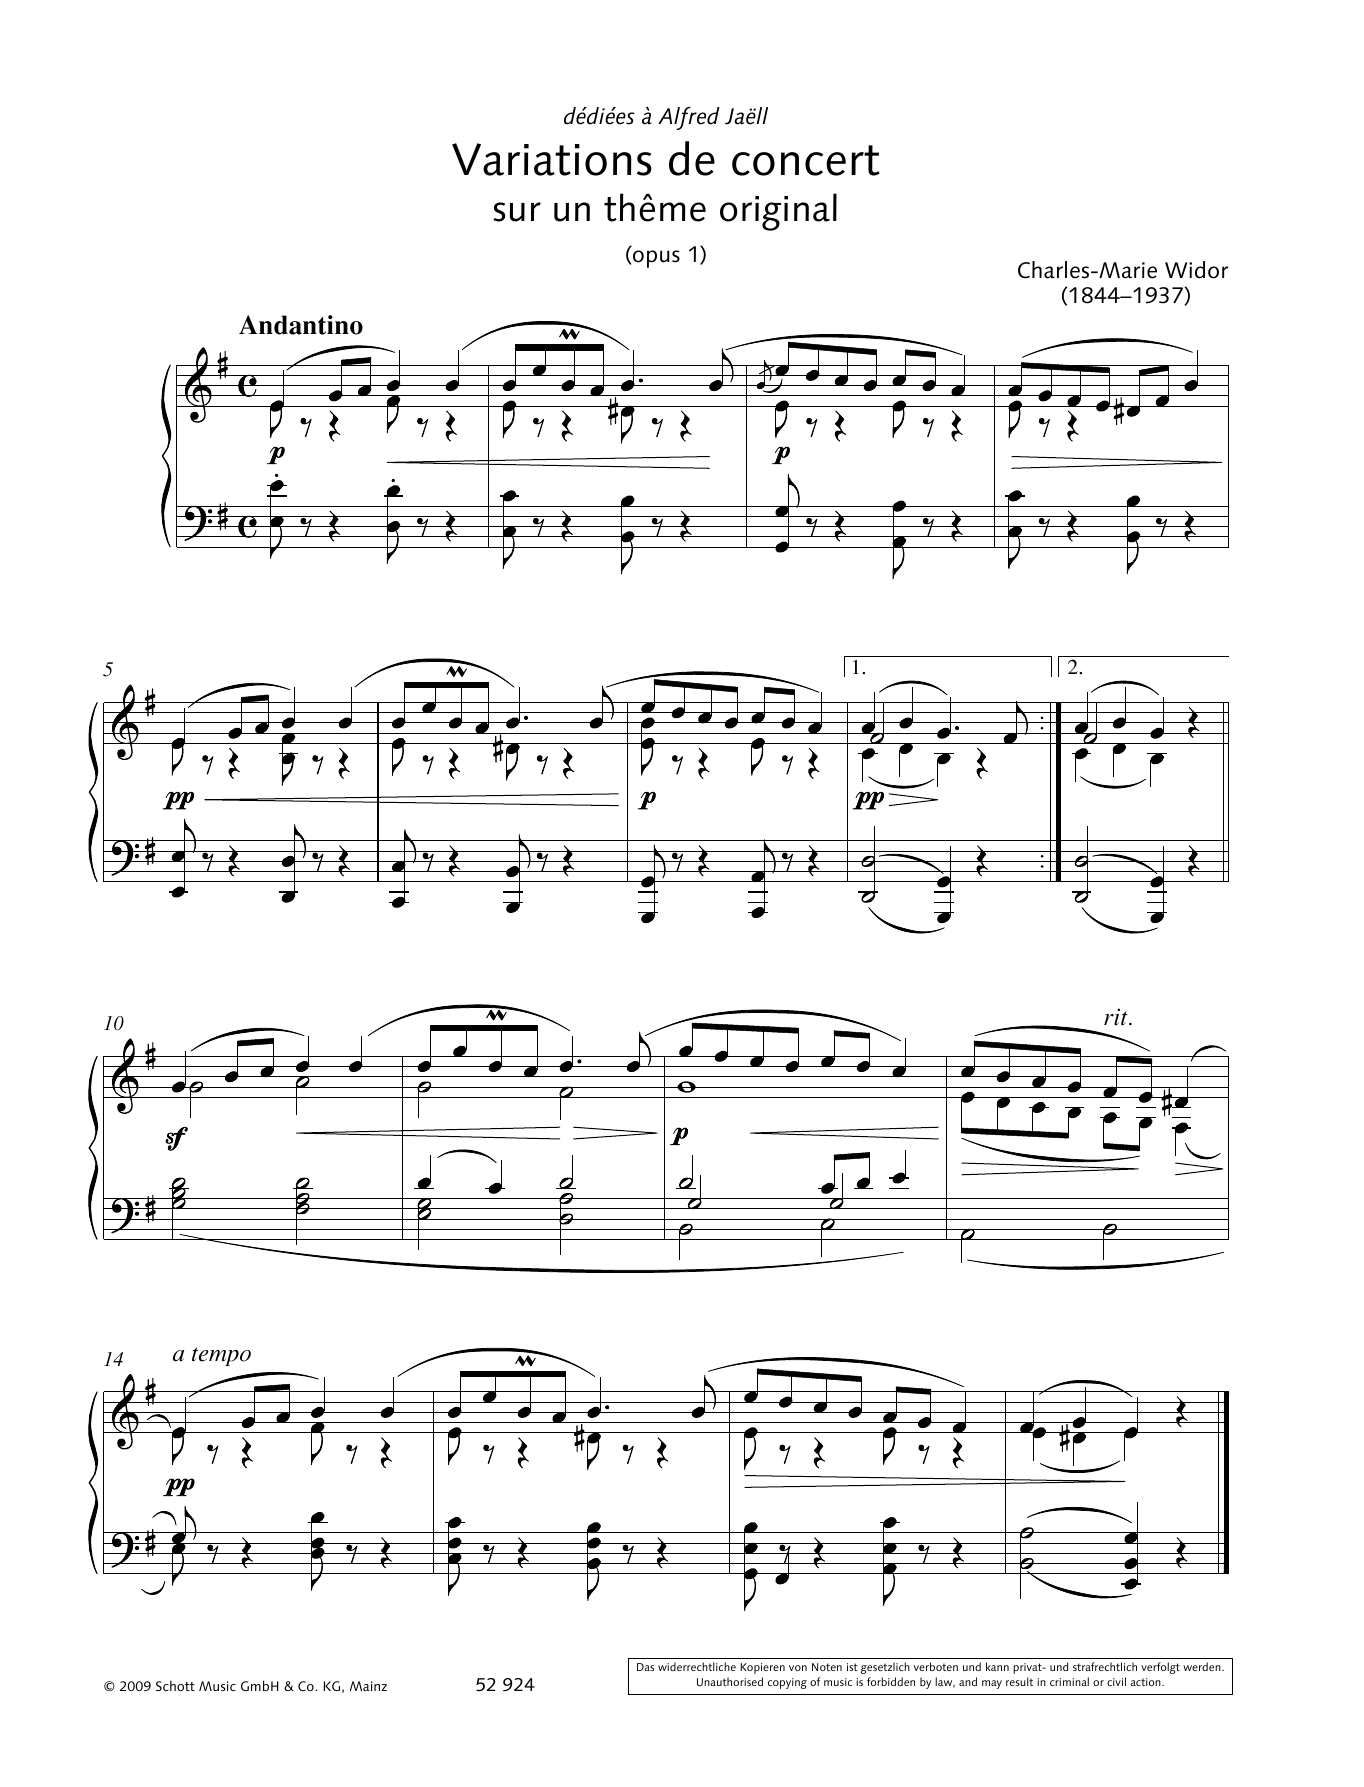 Charles-Marie Widor Variations de concert sur un thême original Sheet Music Notes & Chords for Piano Solo - Download or Print PDF